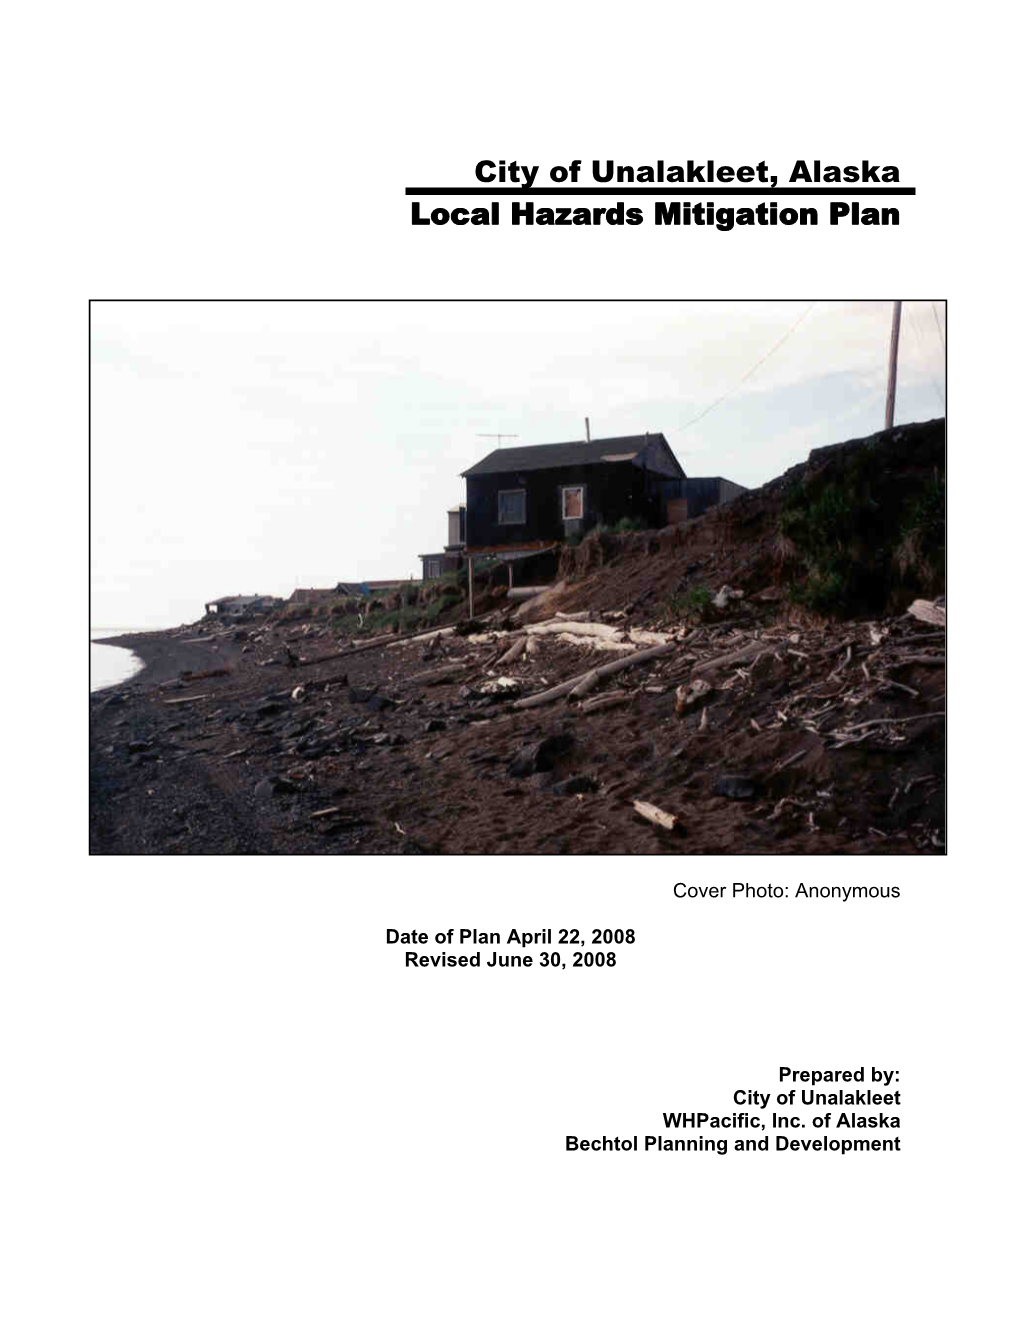 City of Unalakleet, Alaska Local Hazards Mitigation Plan